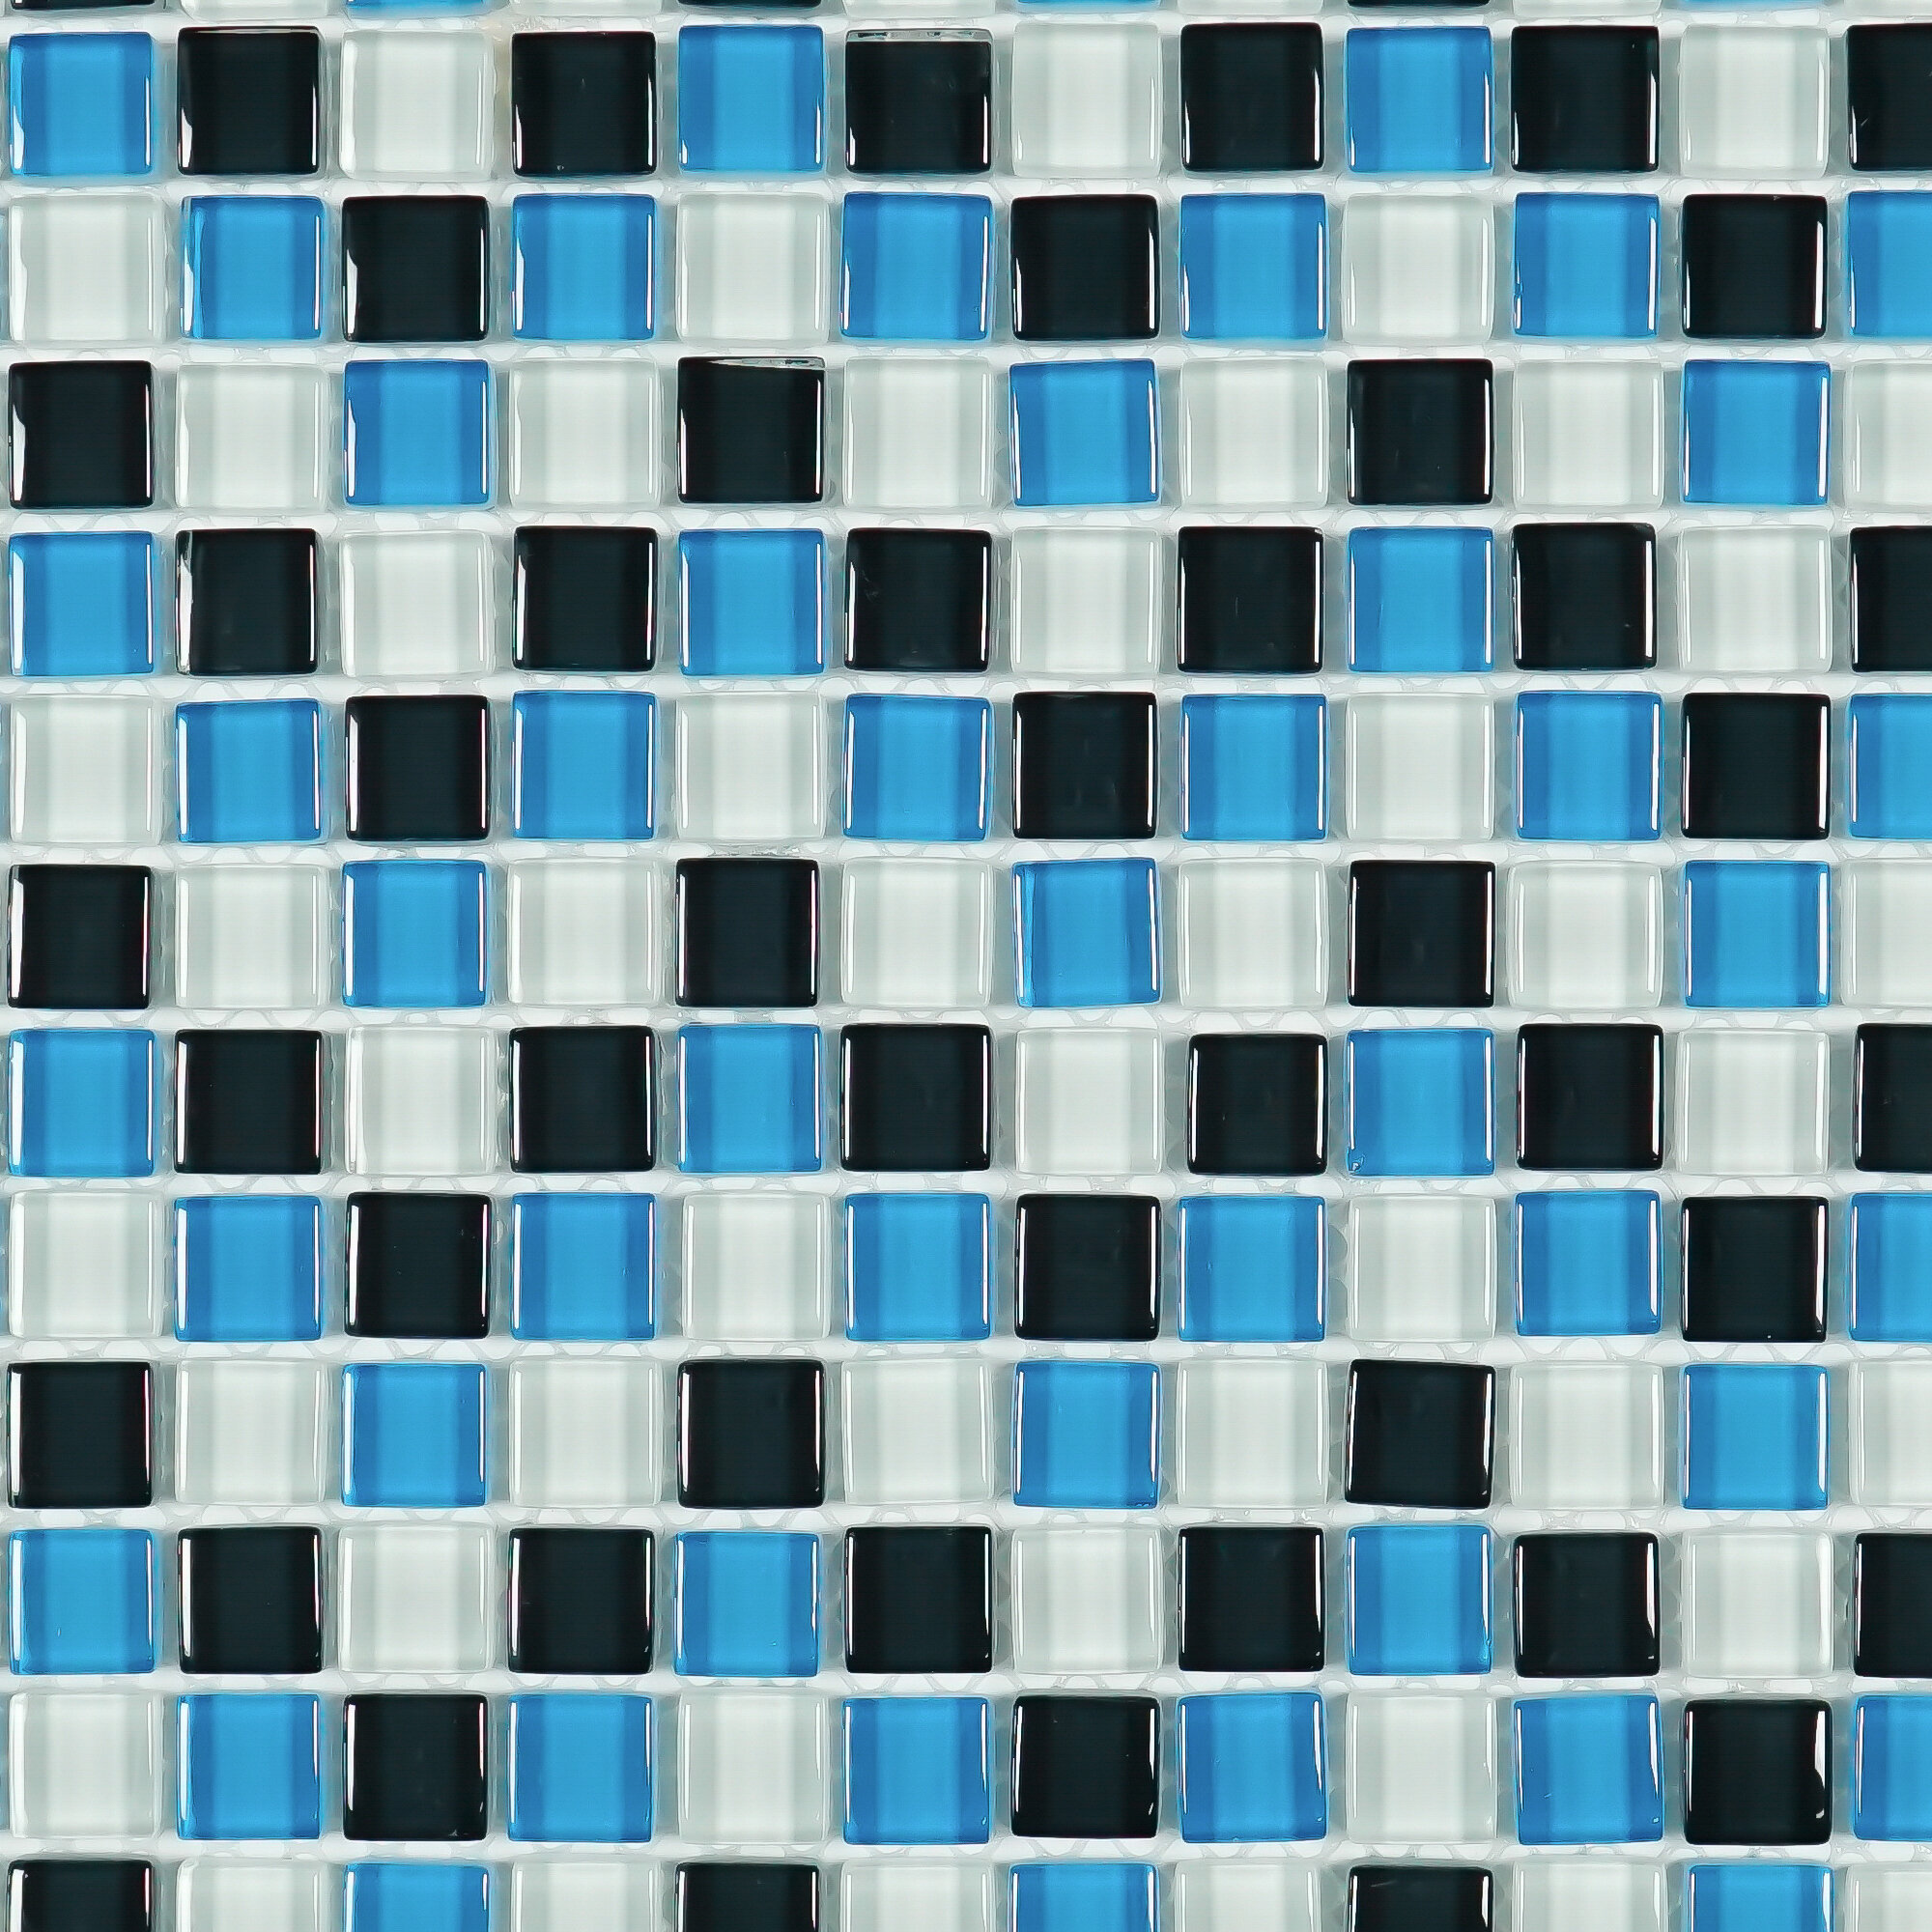 1 x 1 Glass Mosaic Sheet Tile